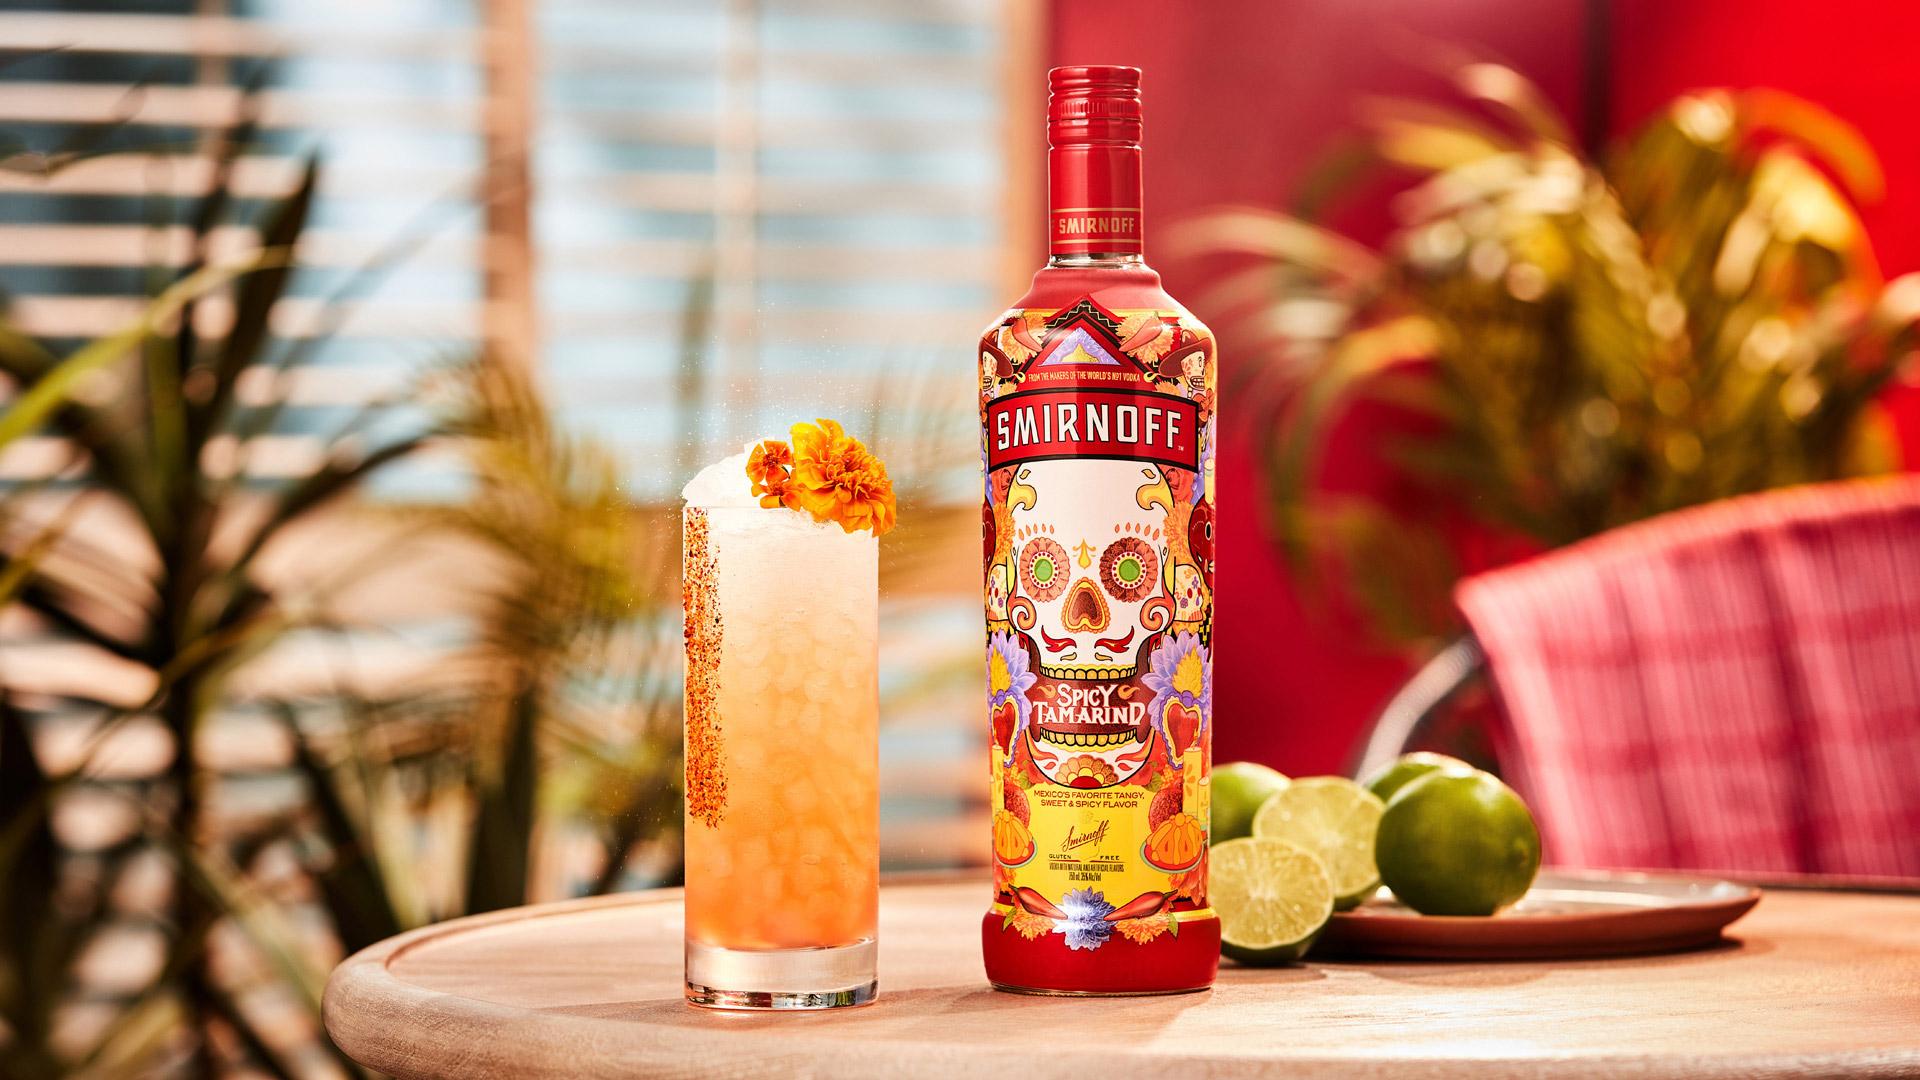 Smirnoff Spicy Tamarind vodka bottle alongside an orange colored Sweet 'N' Spicy cocktail with spicy seasoning and marigold flower garnish. 